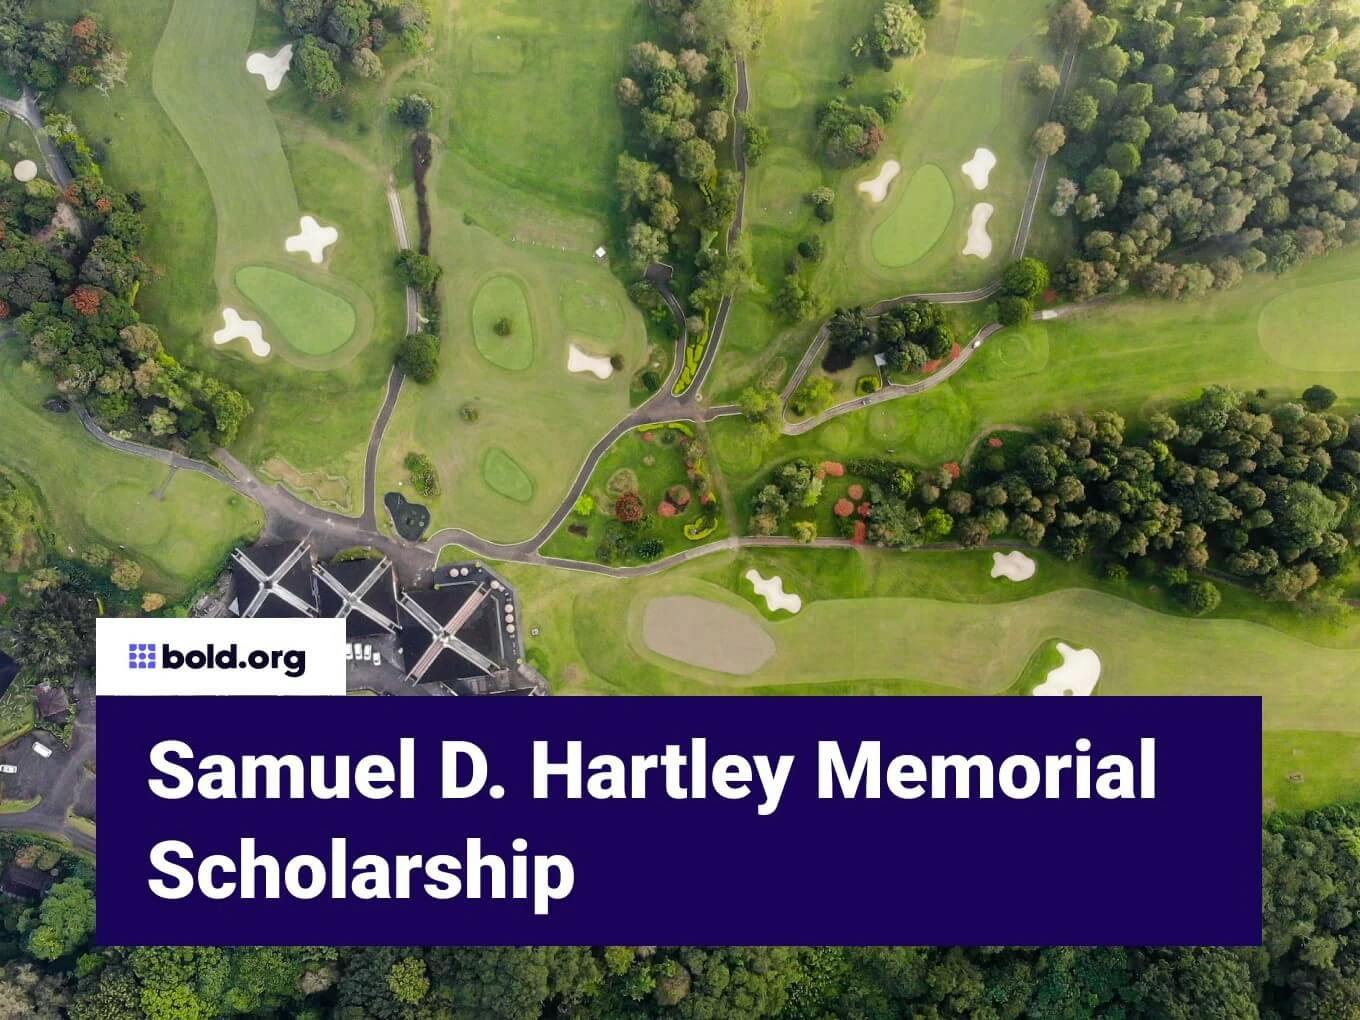 Samuel D. Hartley Memorial Scholarship